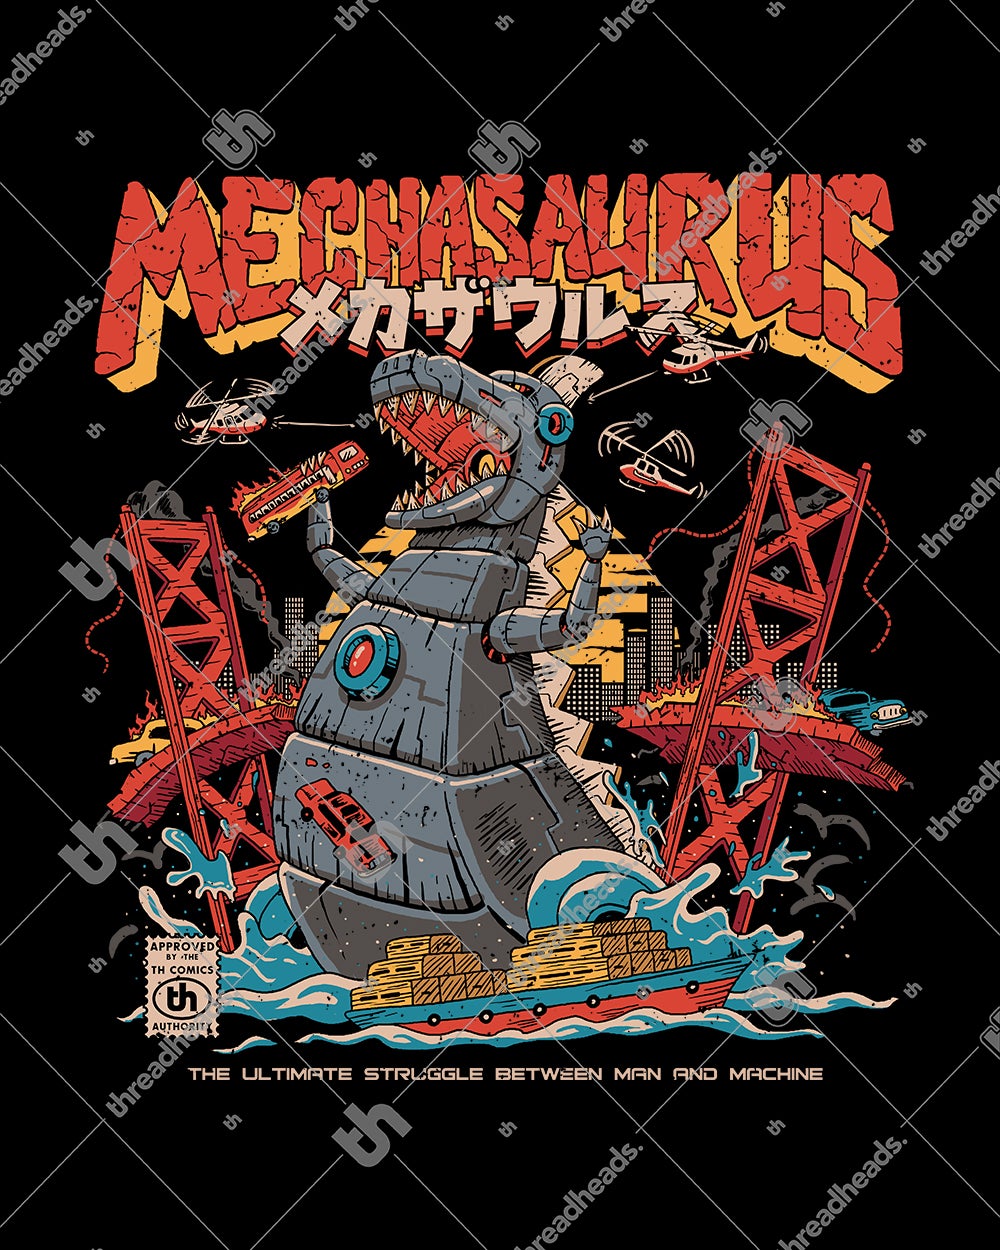 Mechasaurus Kids Sweater Australia Online #colour_black